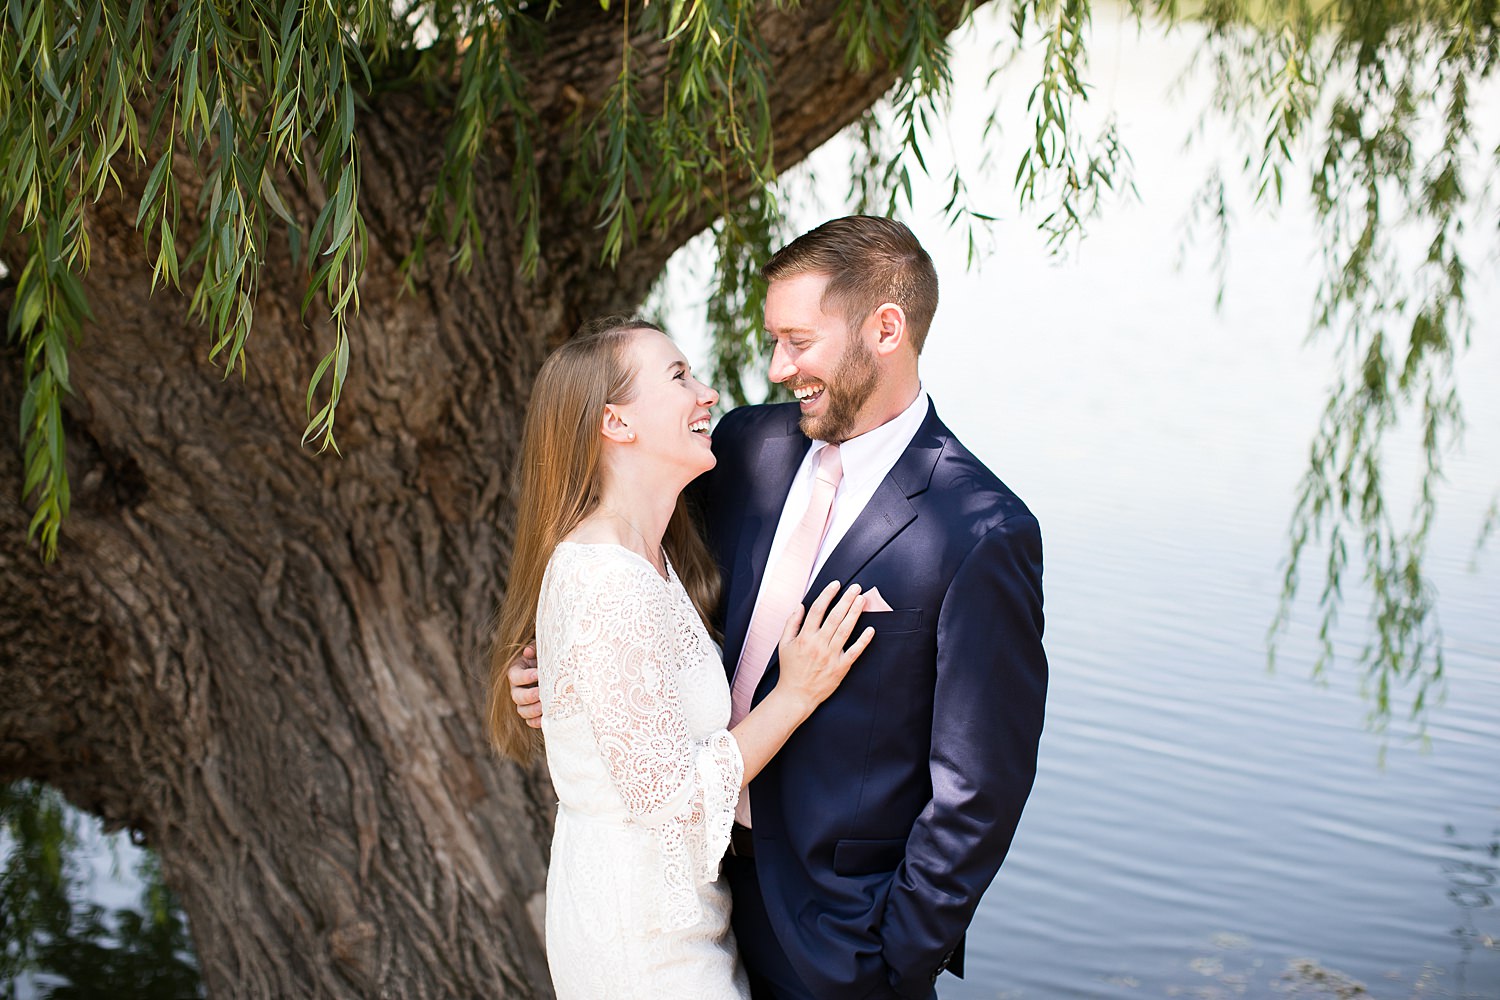 Couple in wedding attire laughs under willow tree at Chicago Botanic Garden.